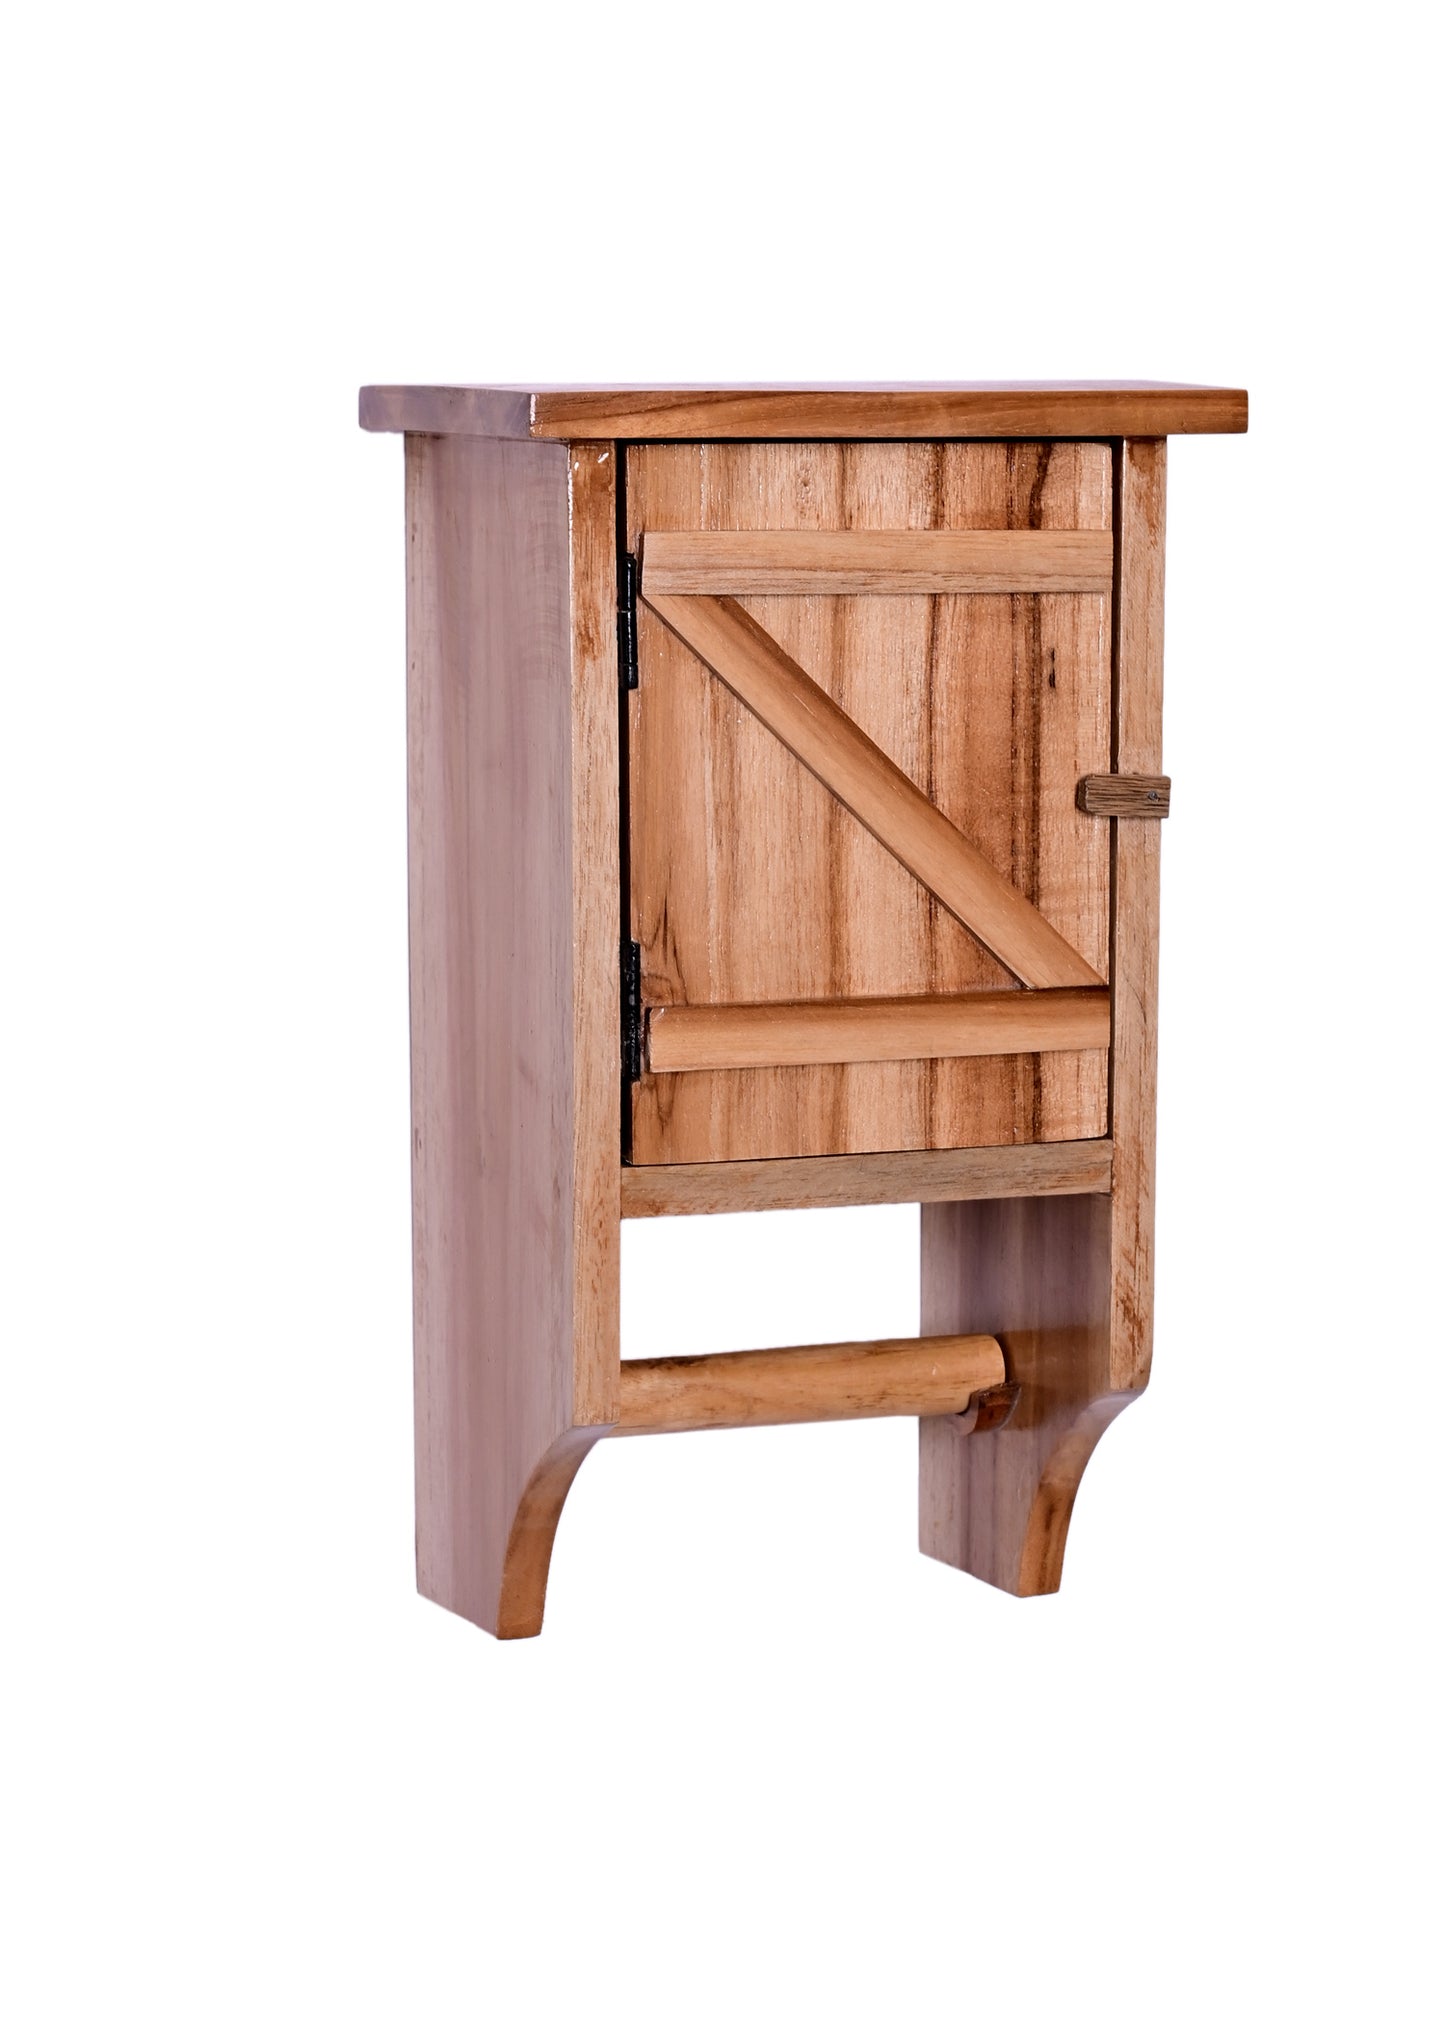 The Weaver's Nest Teak Wood Paper Towel Holder/Tissue Paper Stand/Roll Dispenser with Cabinet Door for Washrooms, Restrooms, Restaurants, Hotels